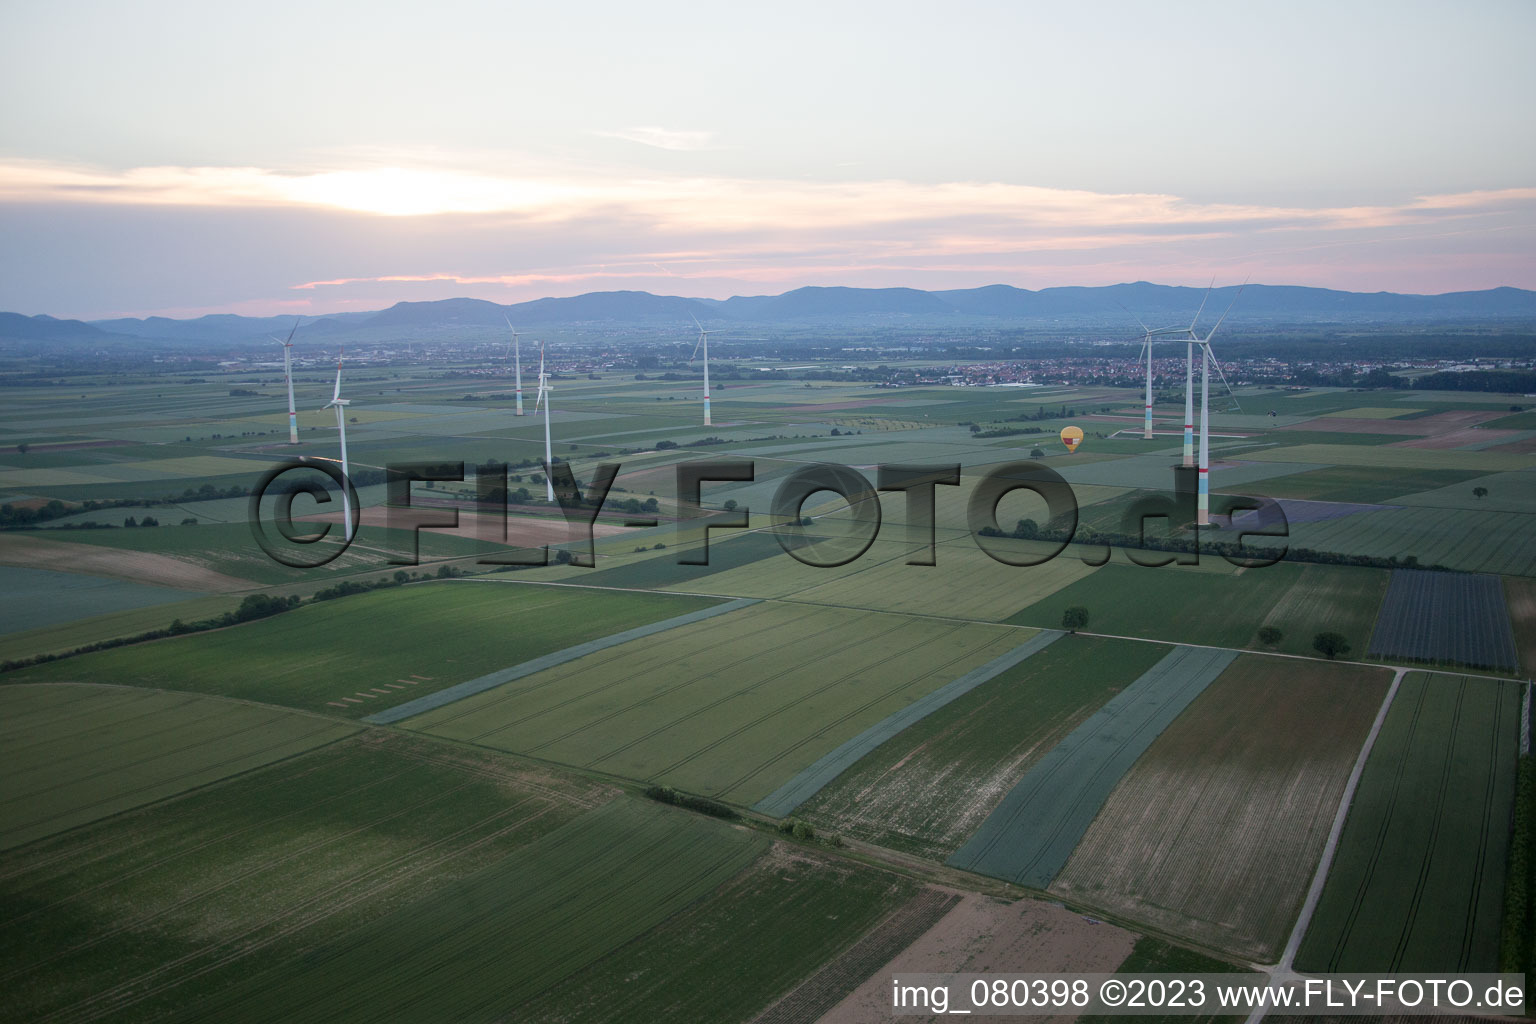 Hot air balloon between wind turbines in the district Herxheim in Herxheim bei Landau/Pfalz in the state Rhineland-Palatinate, Germany